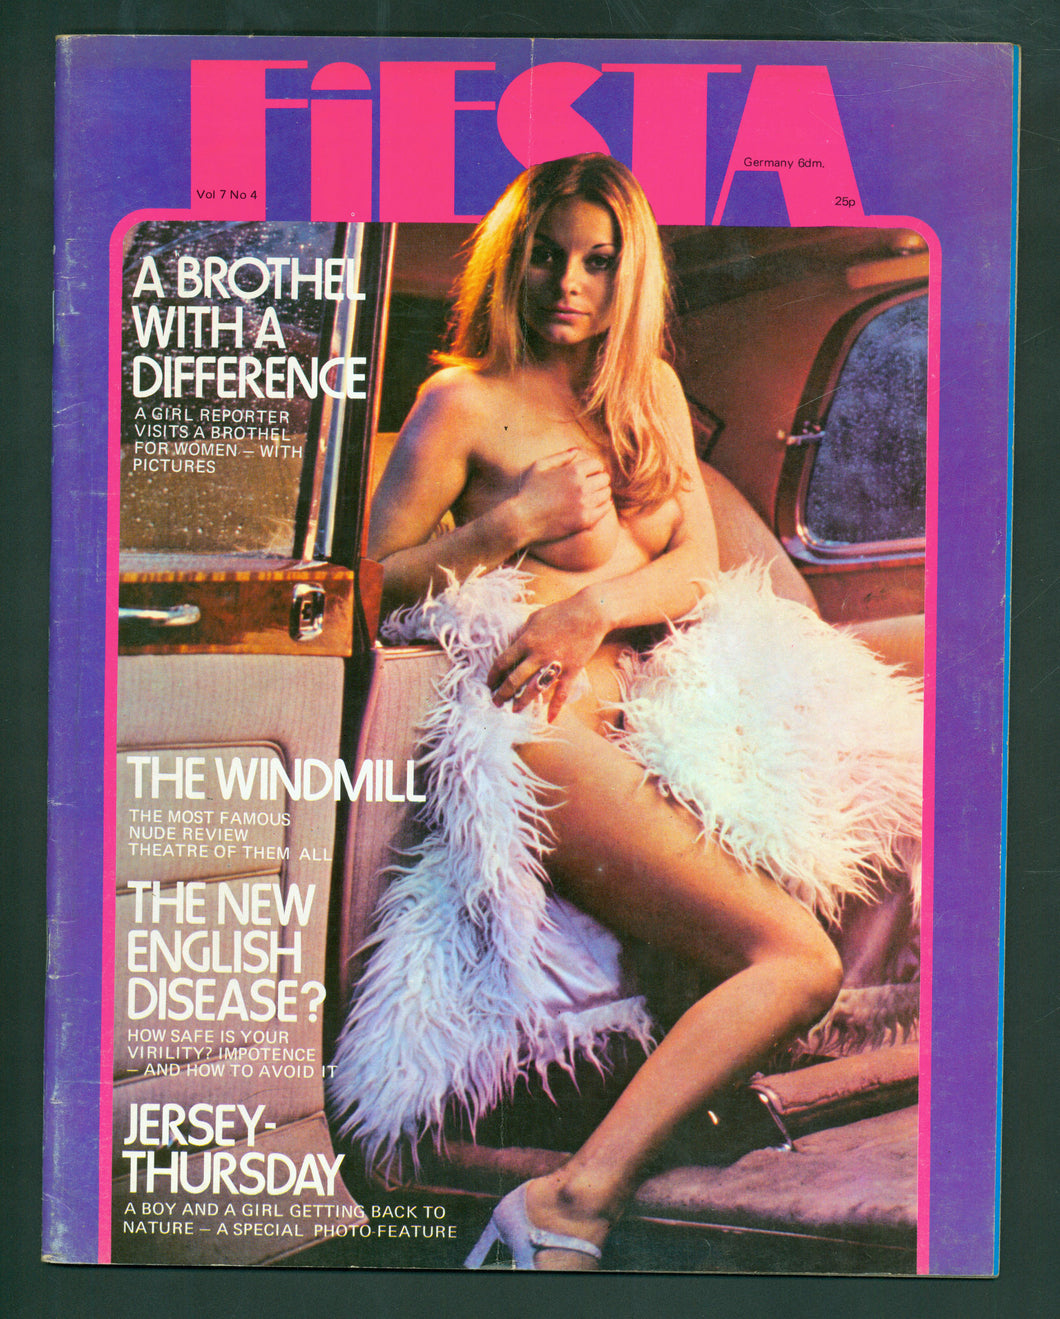 Fiesta Vol 7 No 4, 1973